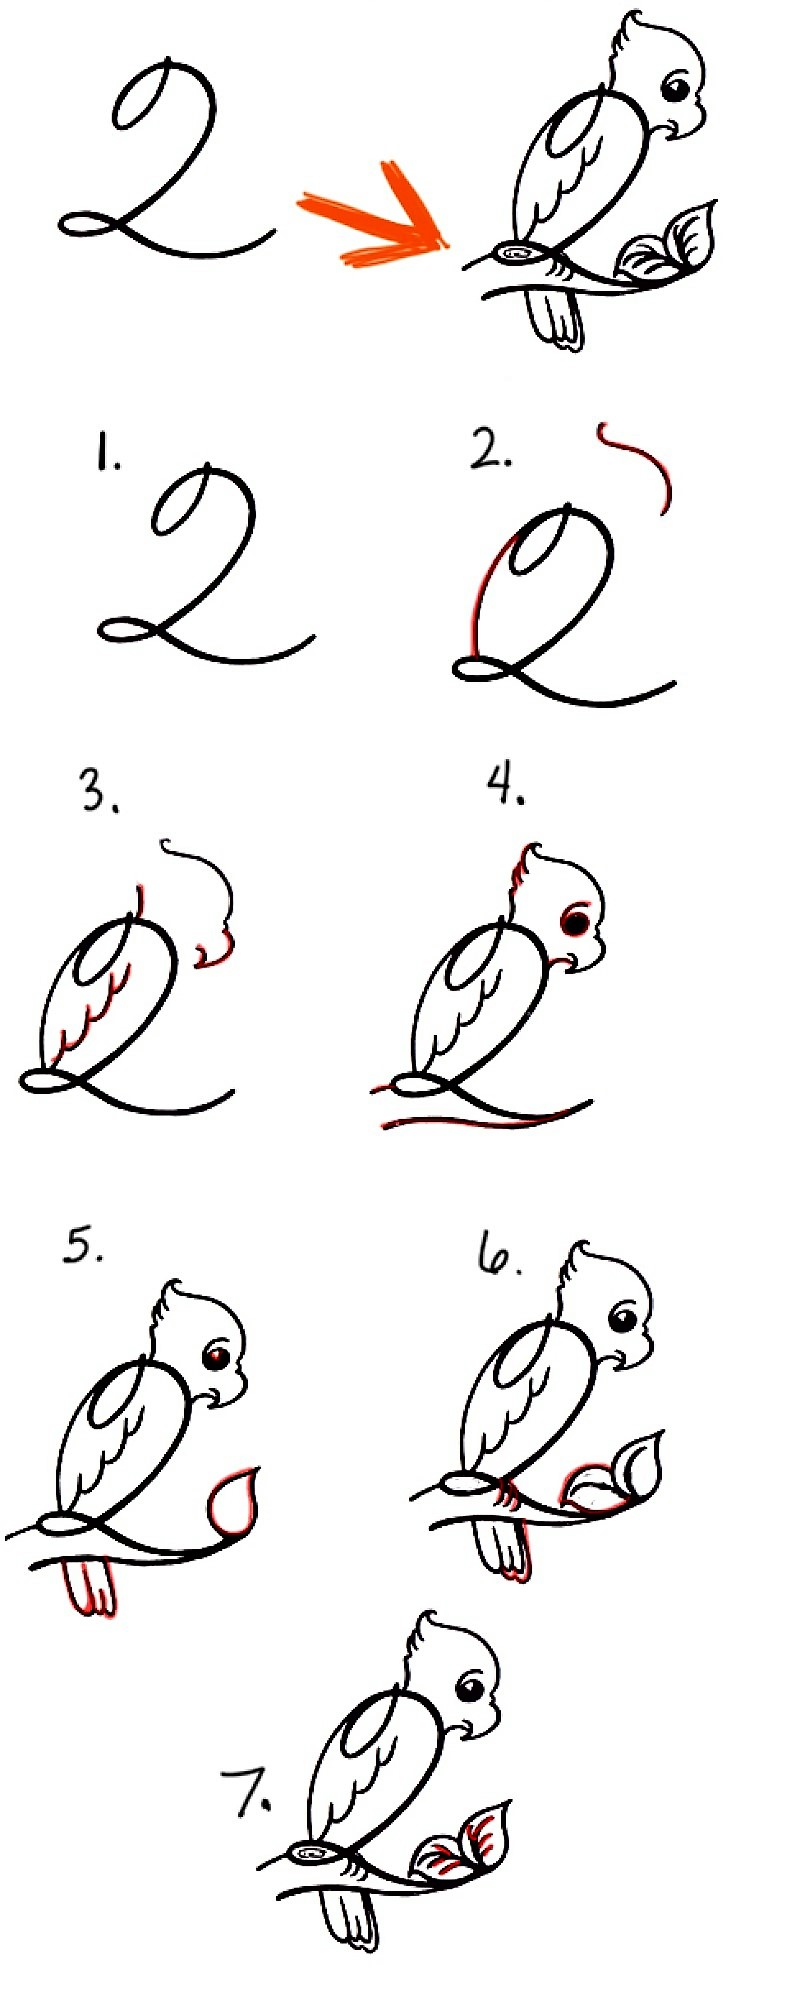 Papağan fikri 9 çizimi